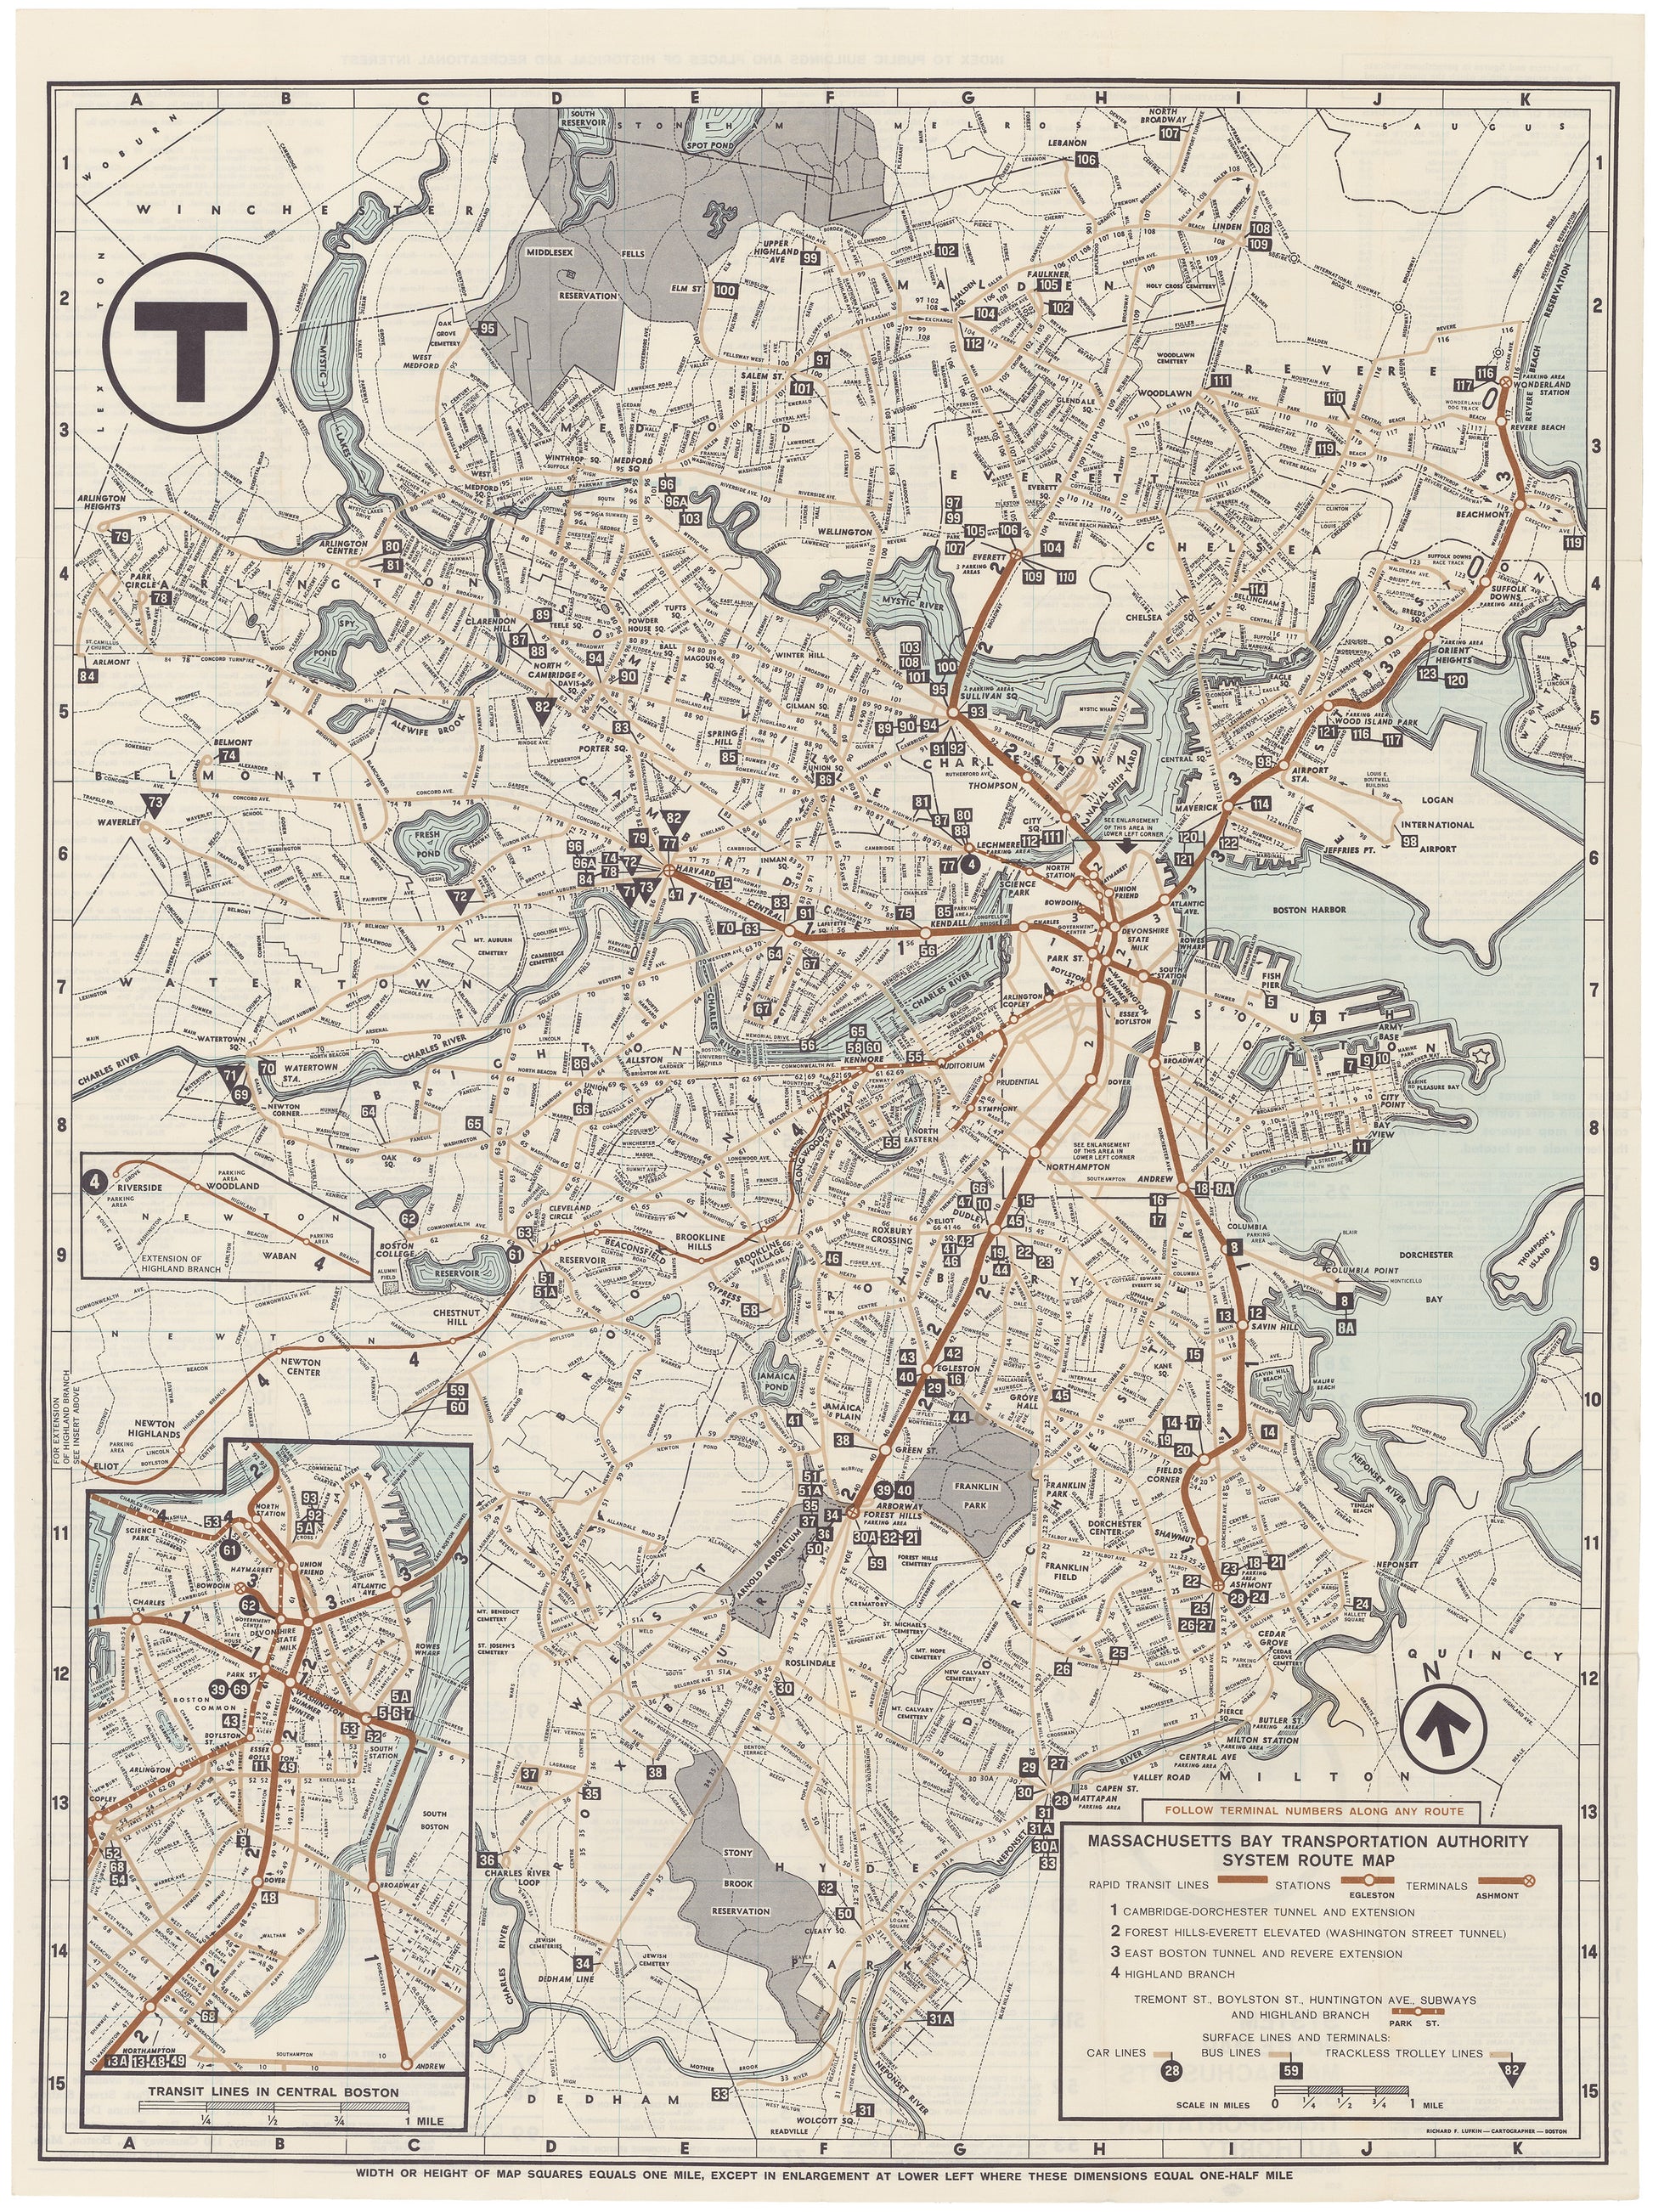 1966 MBTA System Map